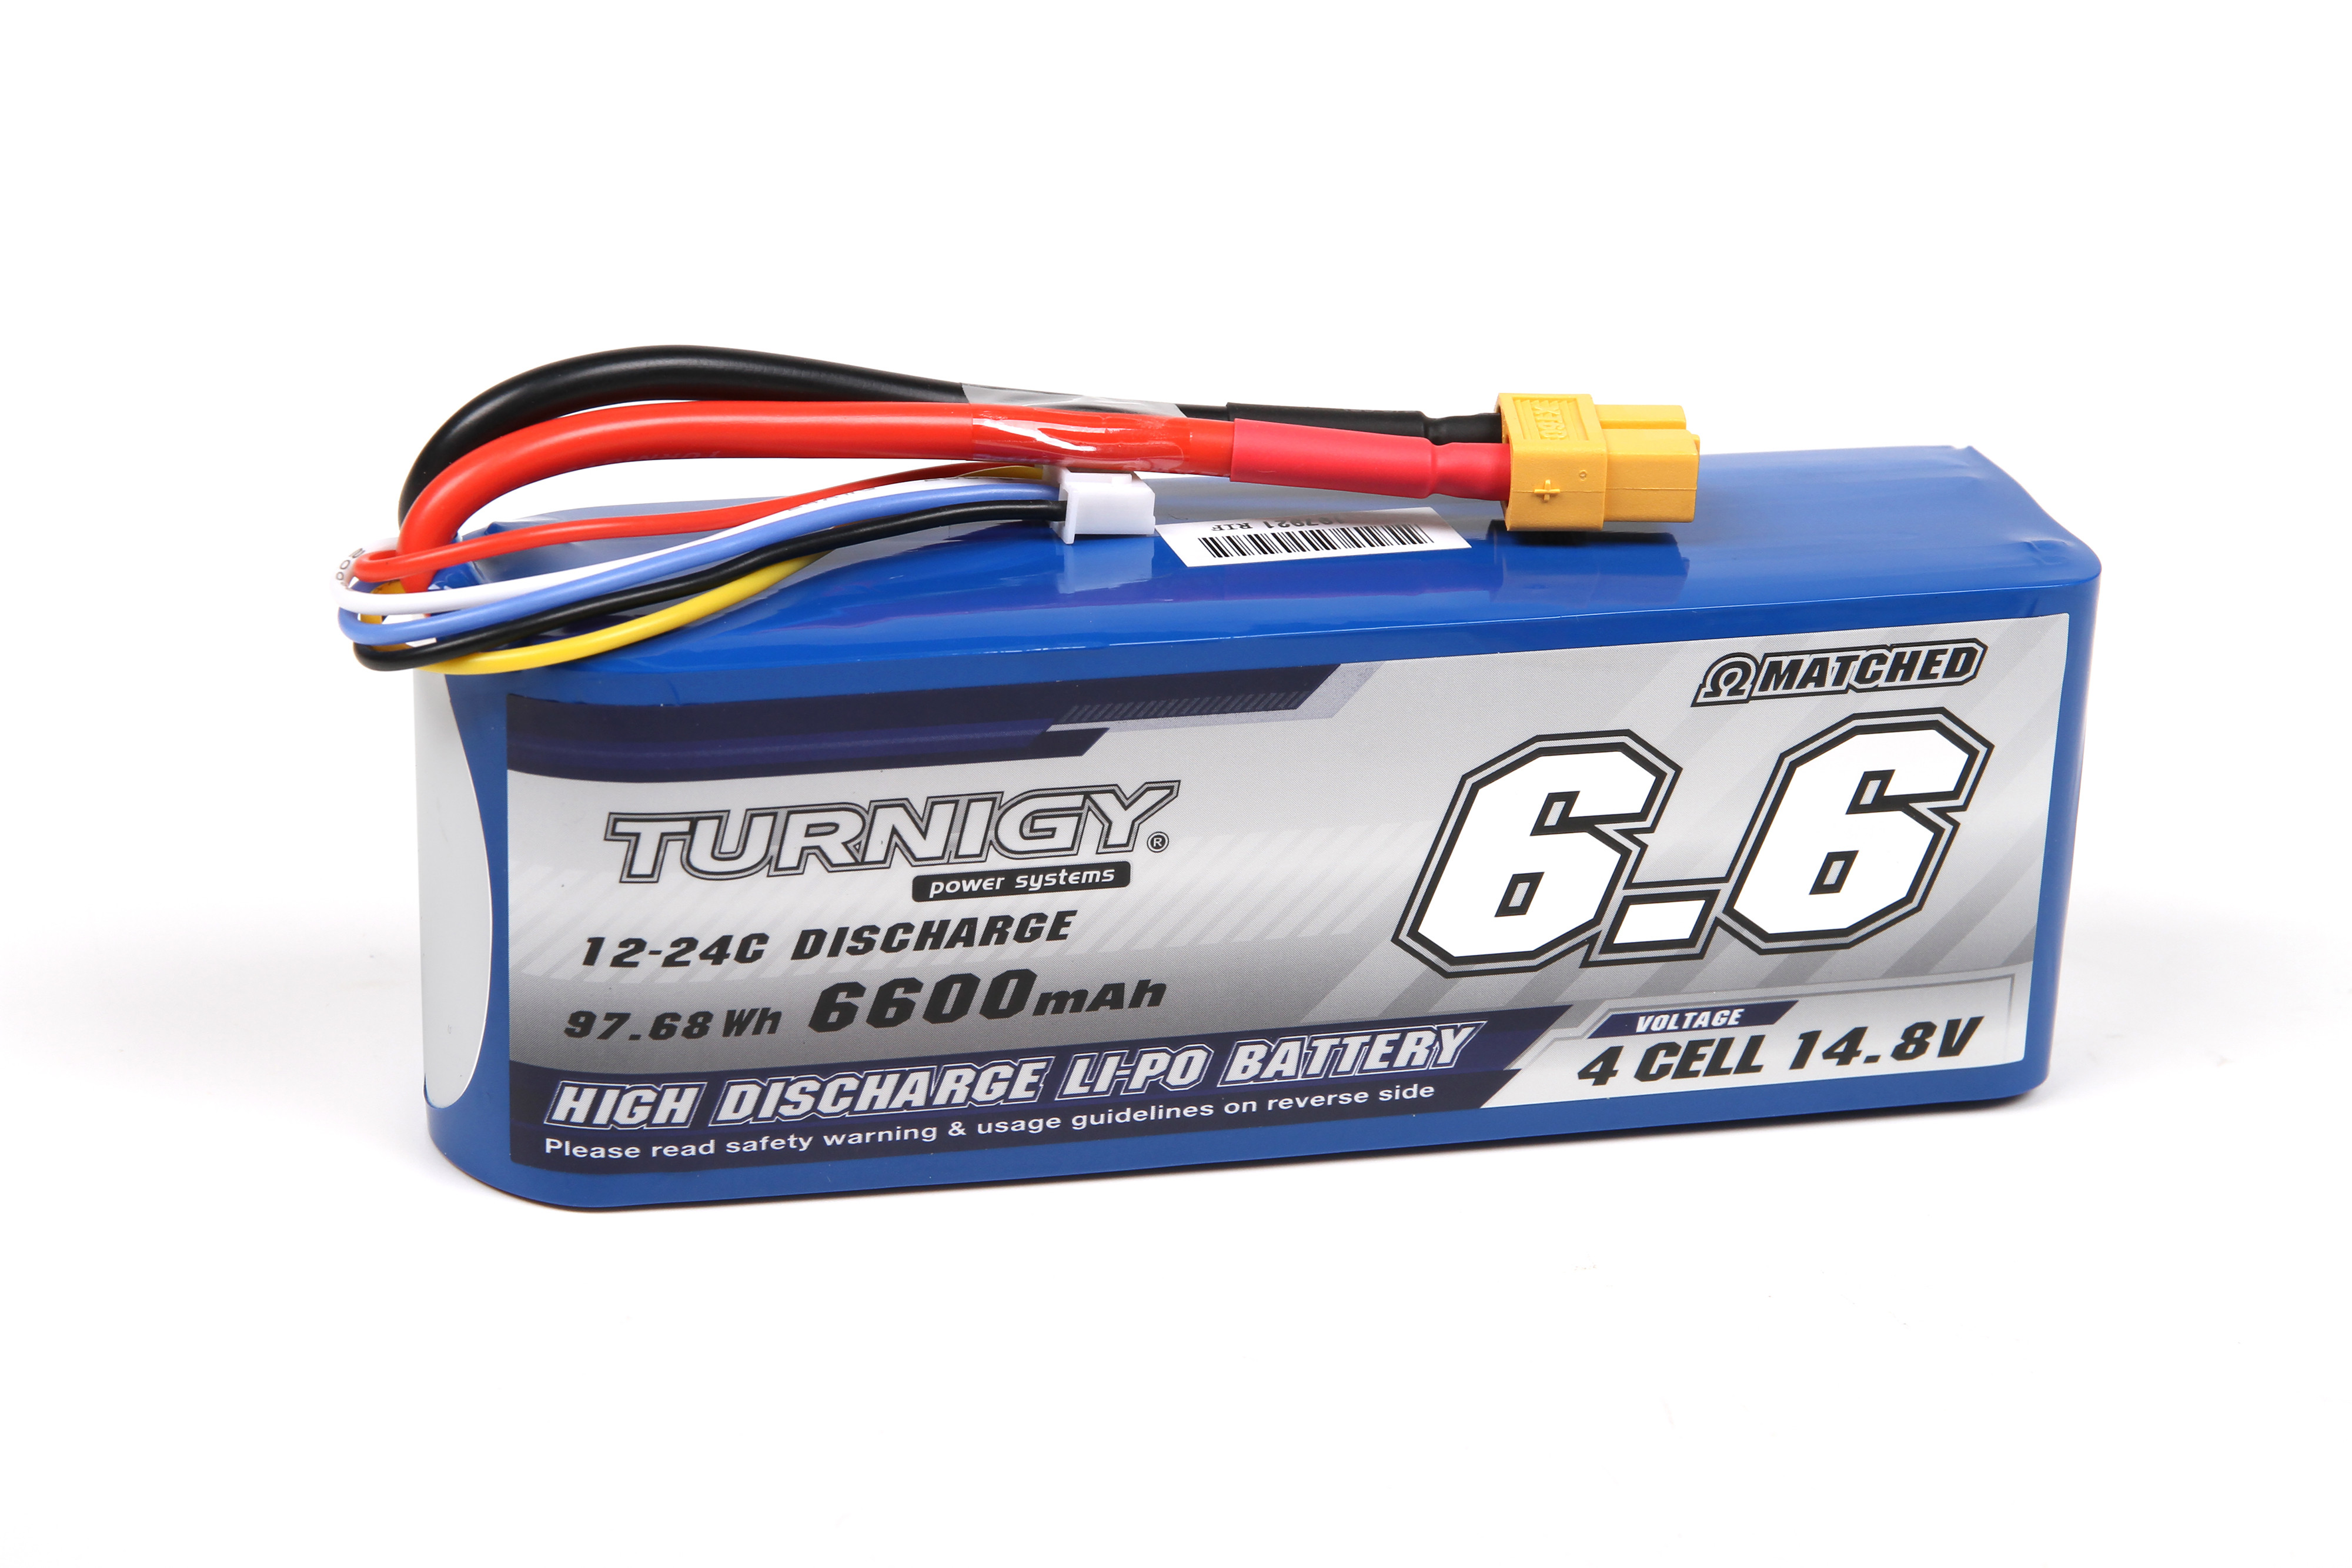 Turnigy 2200mAh 3S 25C 35C Lipo Battery Pack E-Flite Blade 450 E325  XT60 XT-60